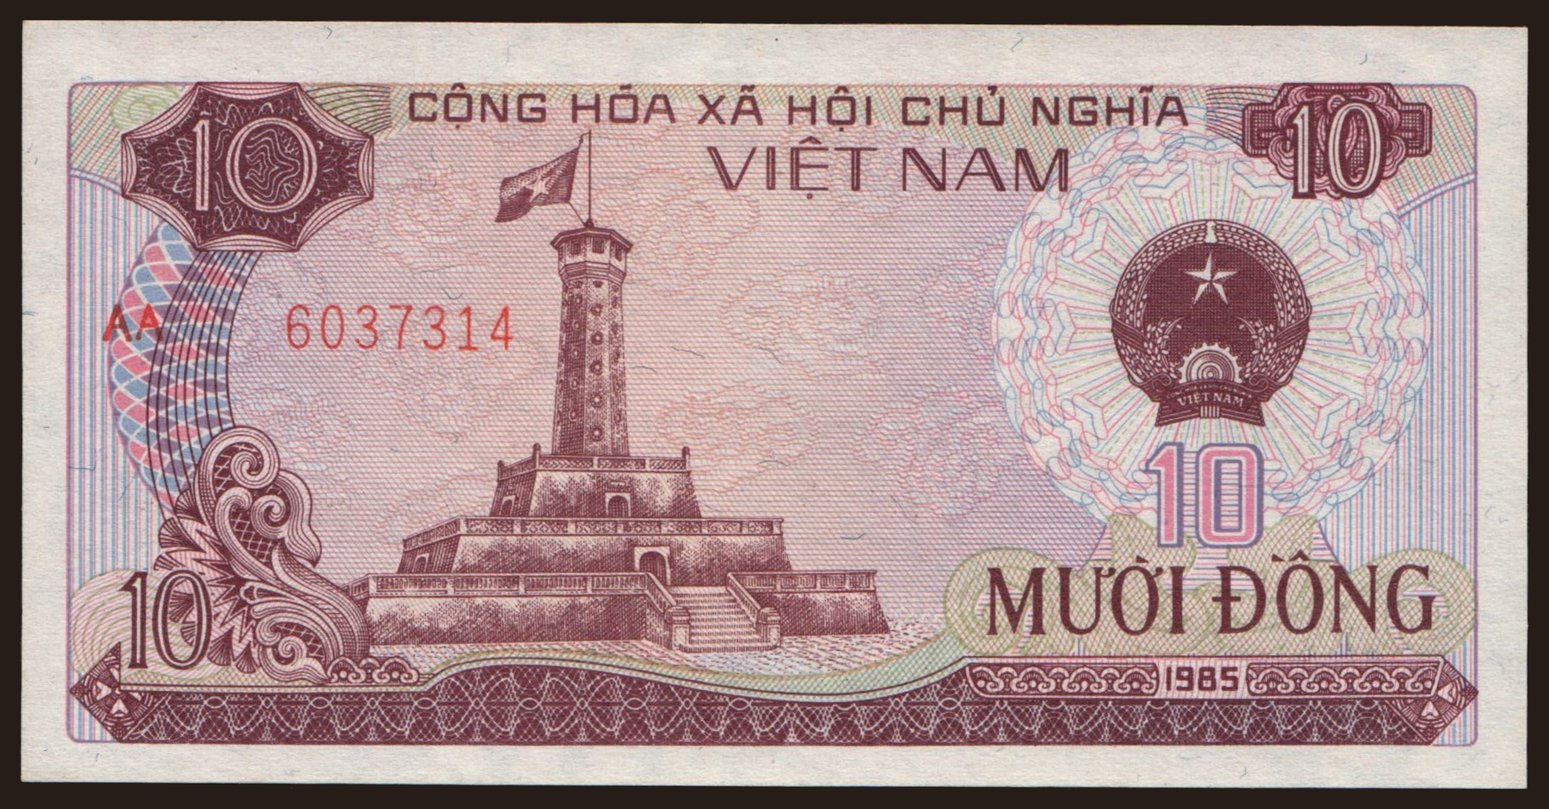 10 dong, 1985